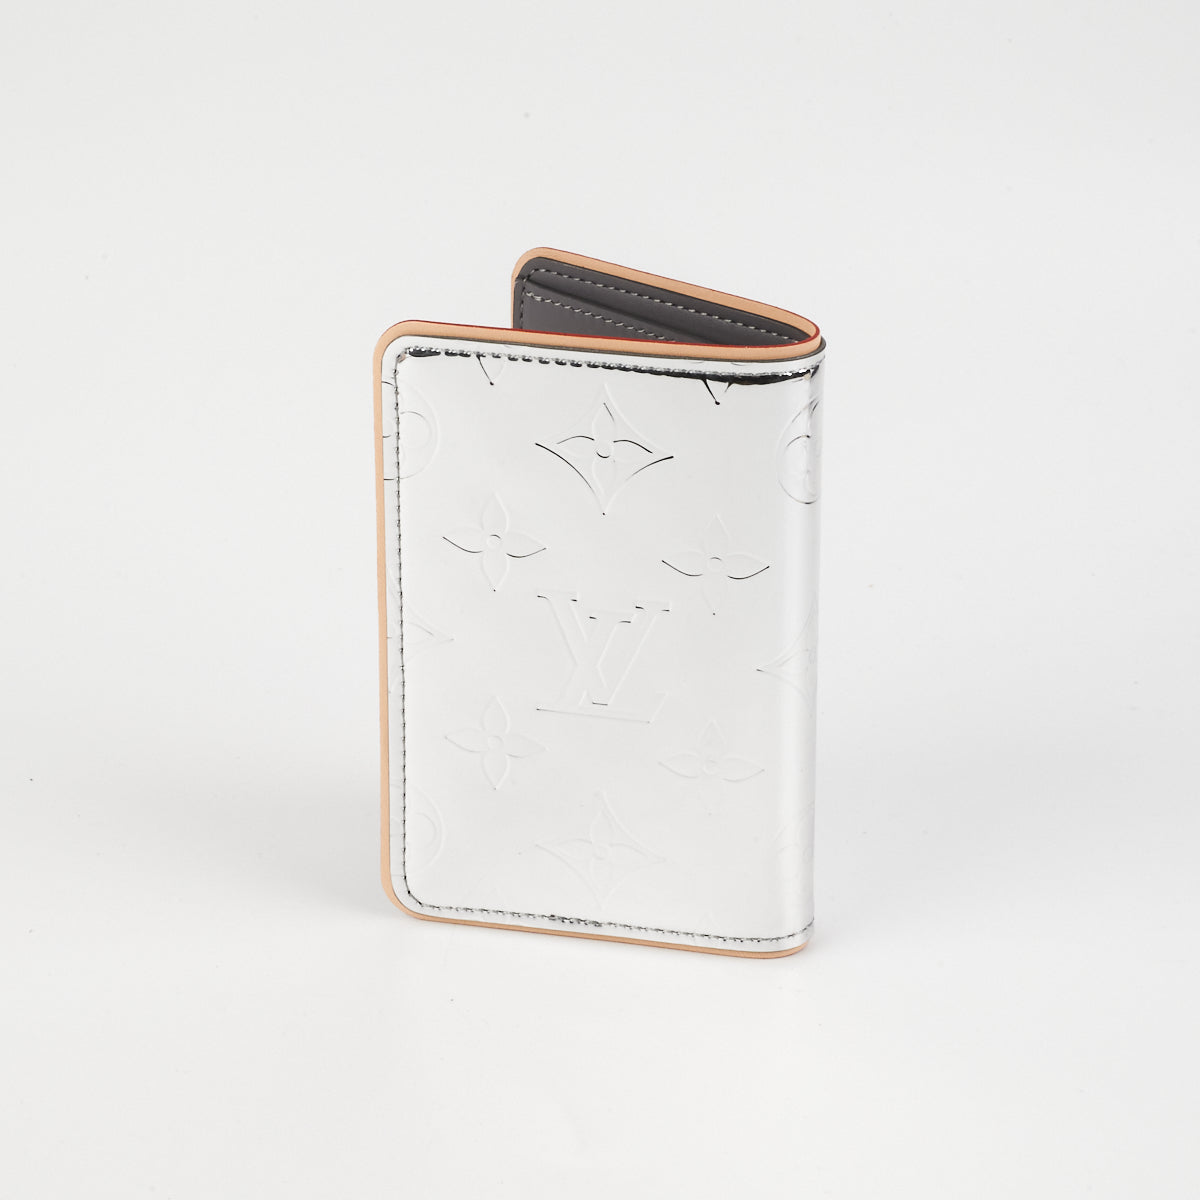 Louis Vuitton Pocket Organizer Monogram Titanium Grey